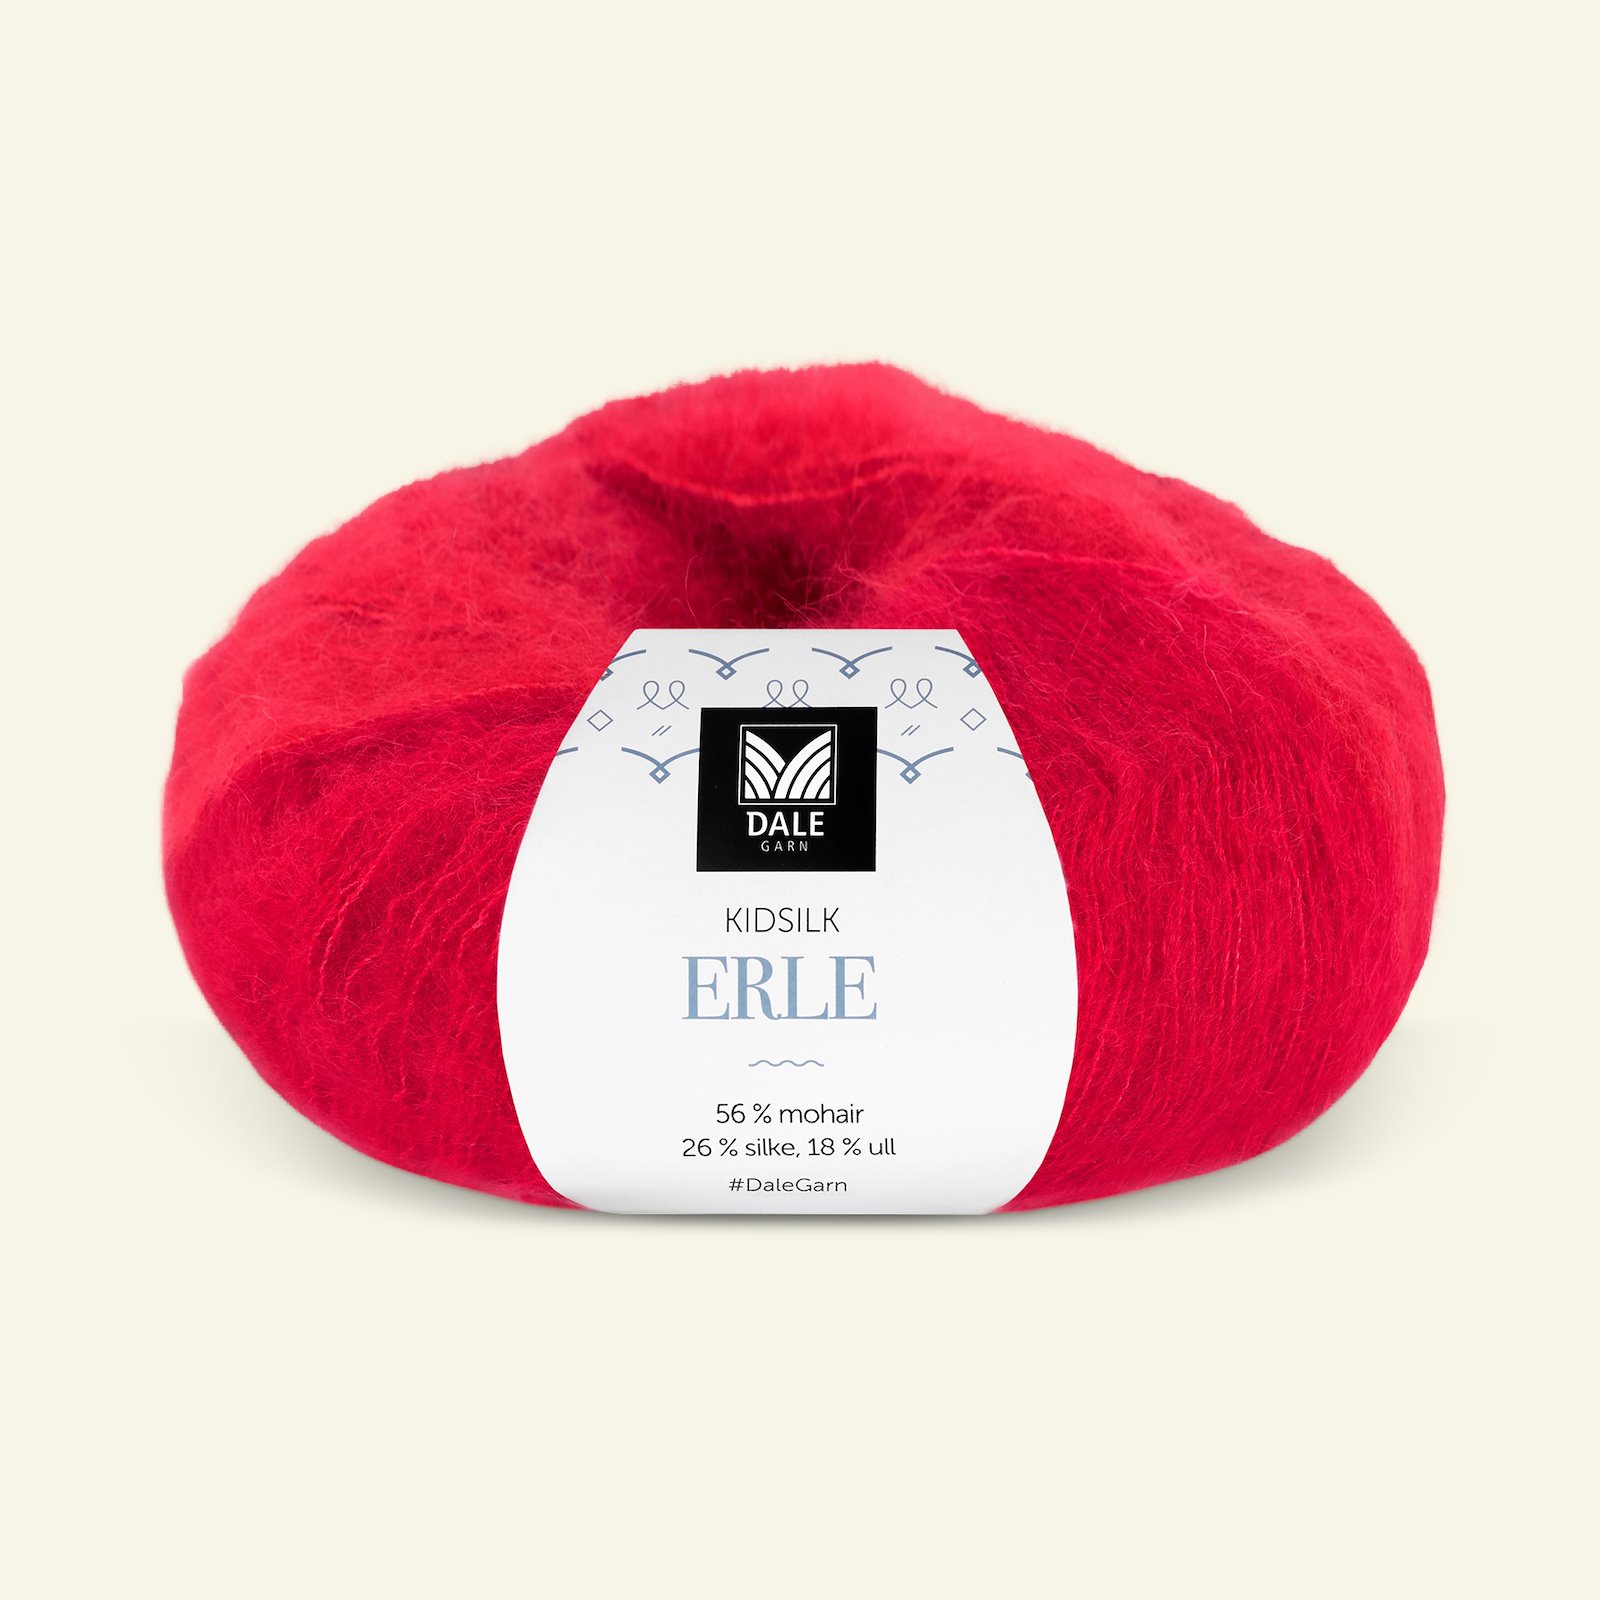 Dale Garn, silk mohair wool yarn "Kidsilk Erle", red (9082) 90001210_pack